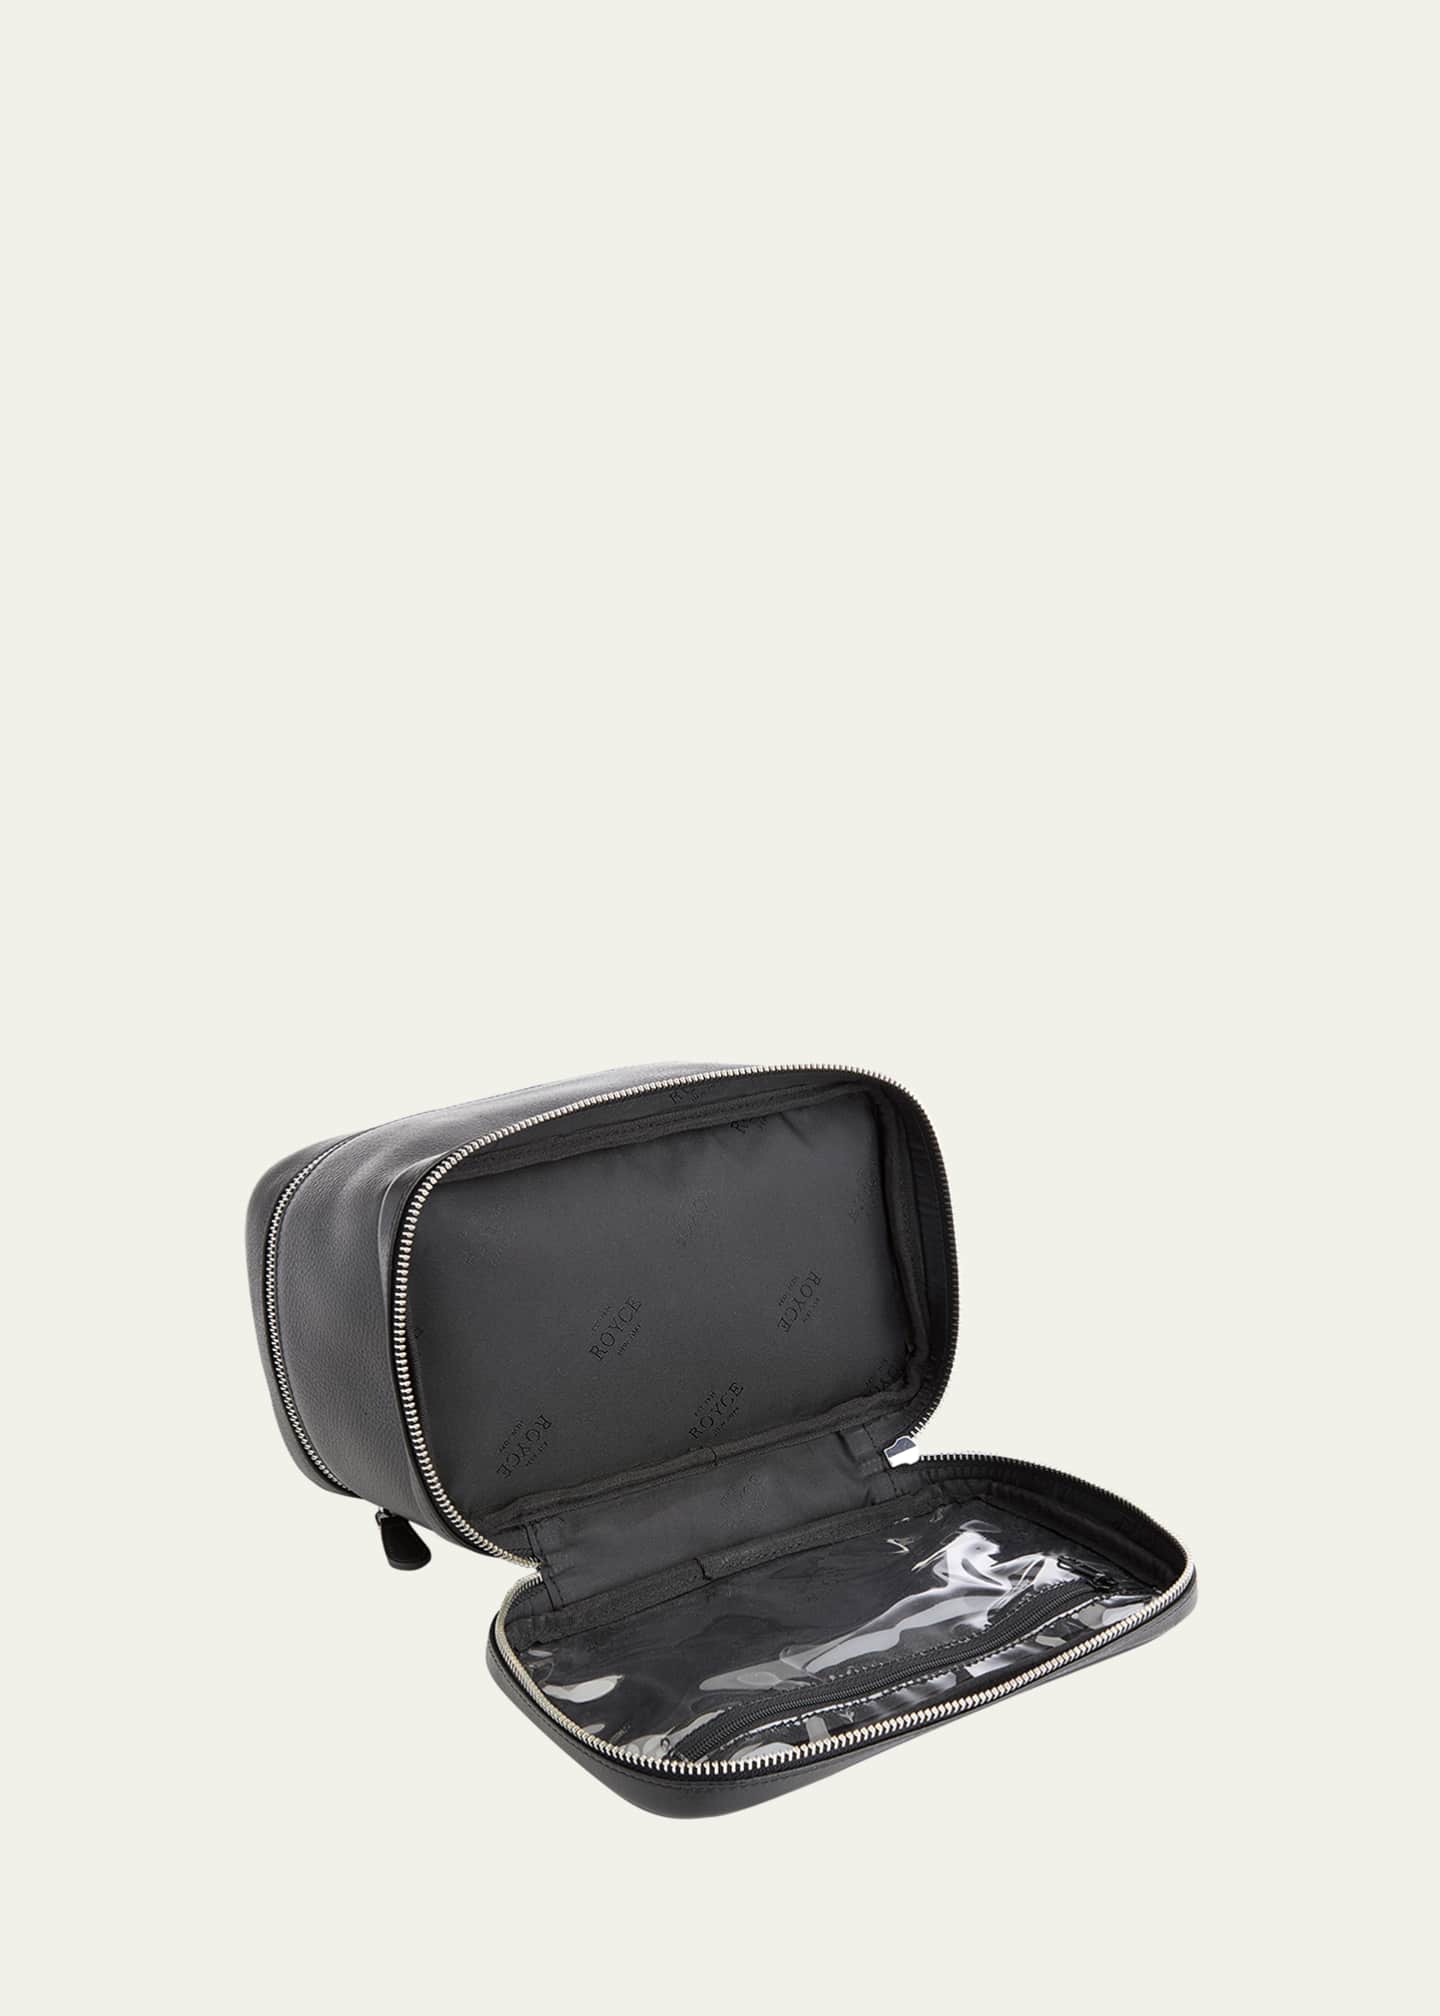 Royce Leather Black Toiletry Bag